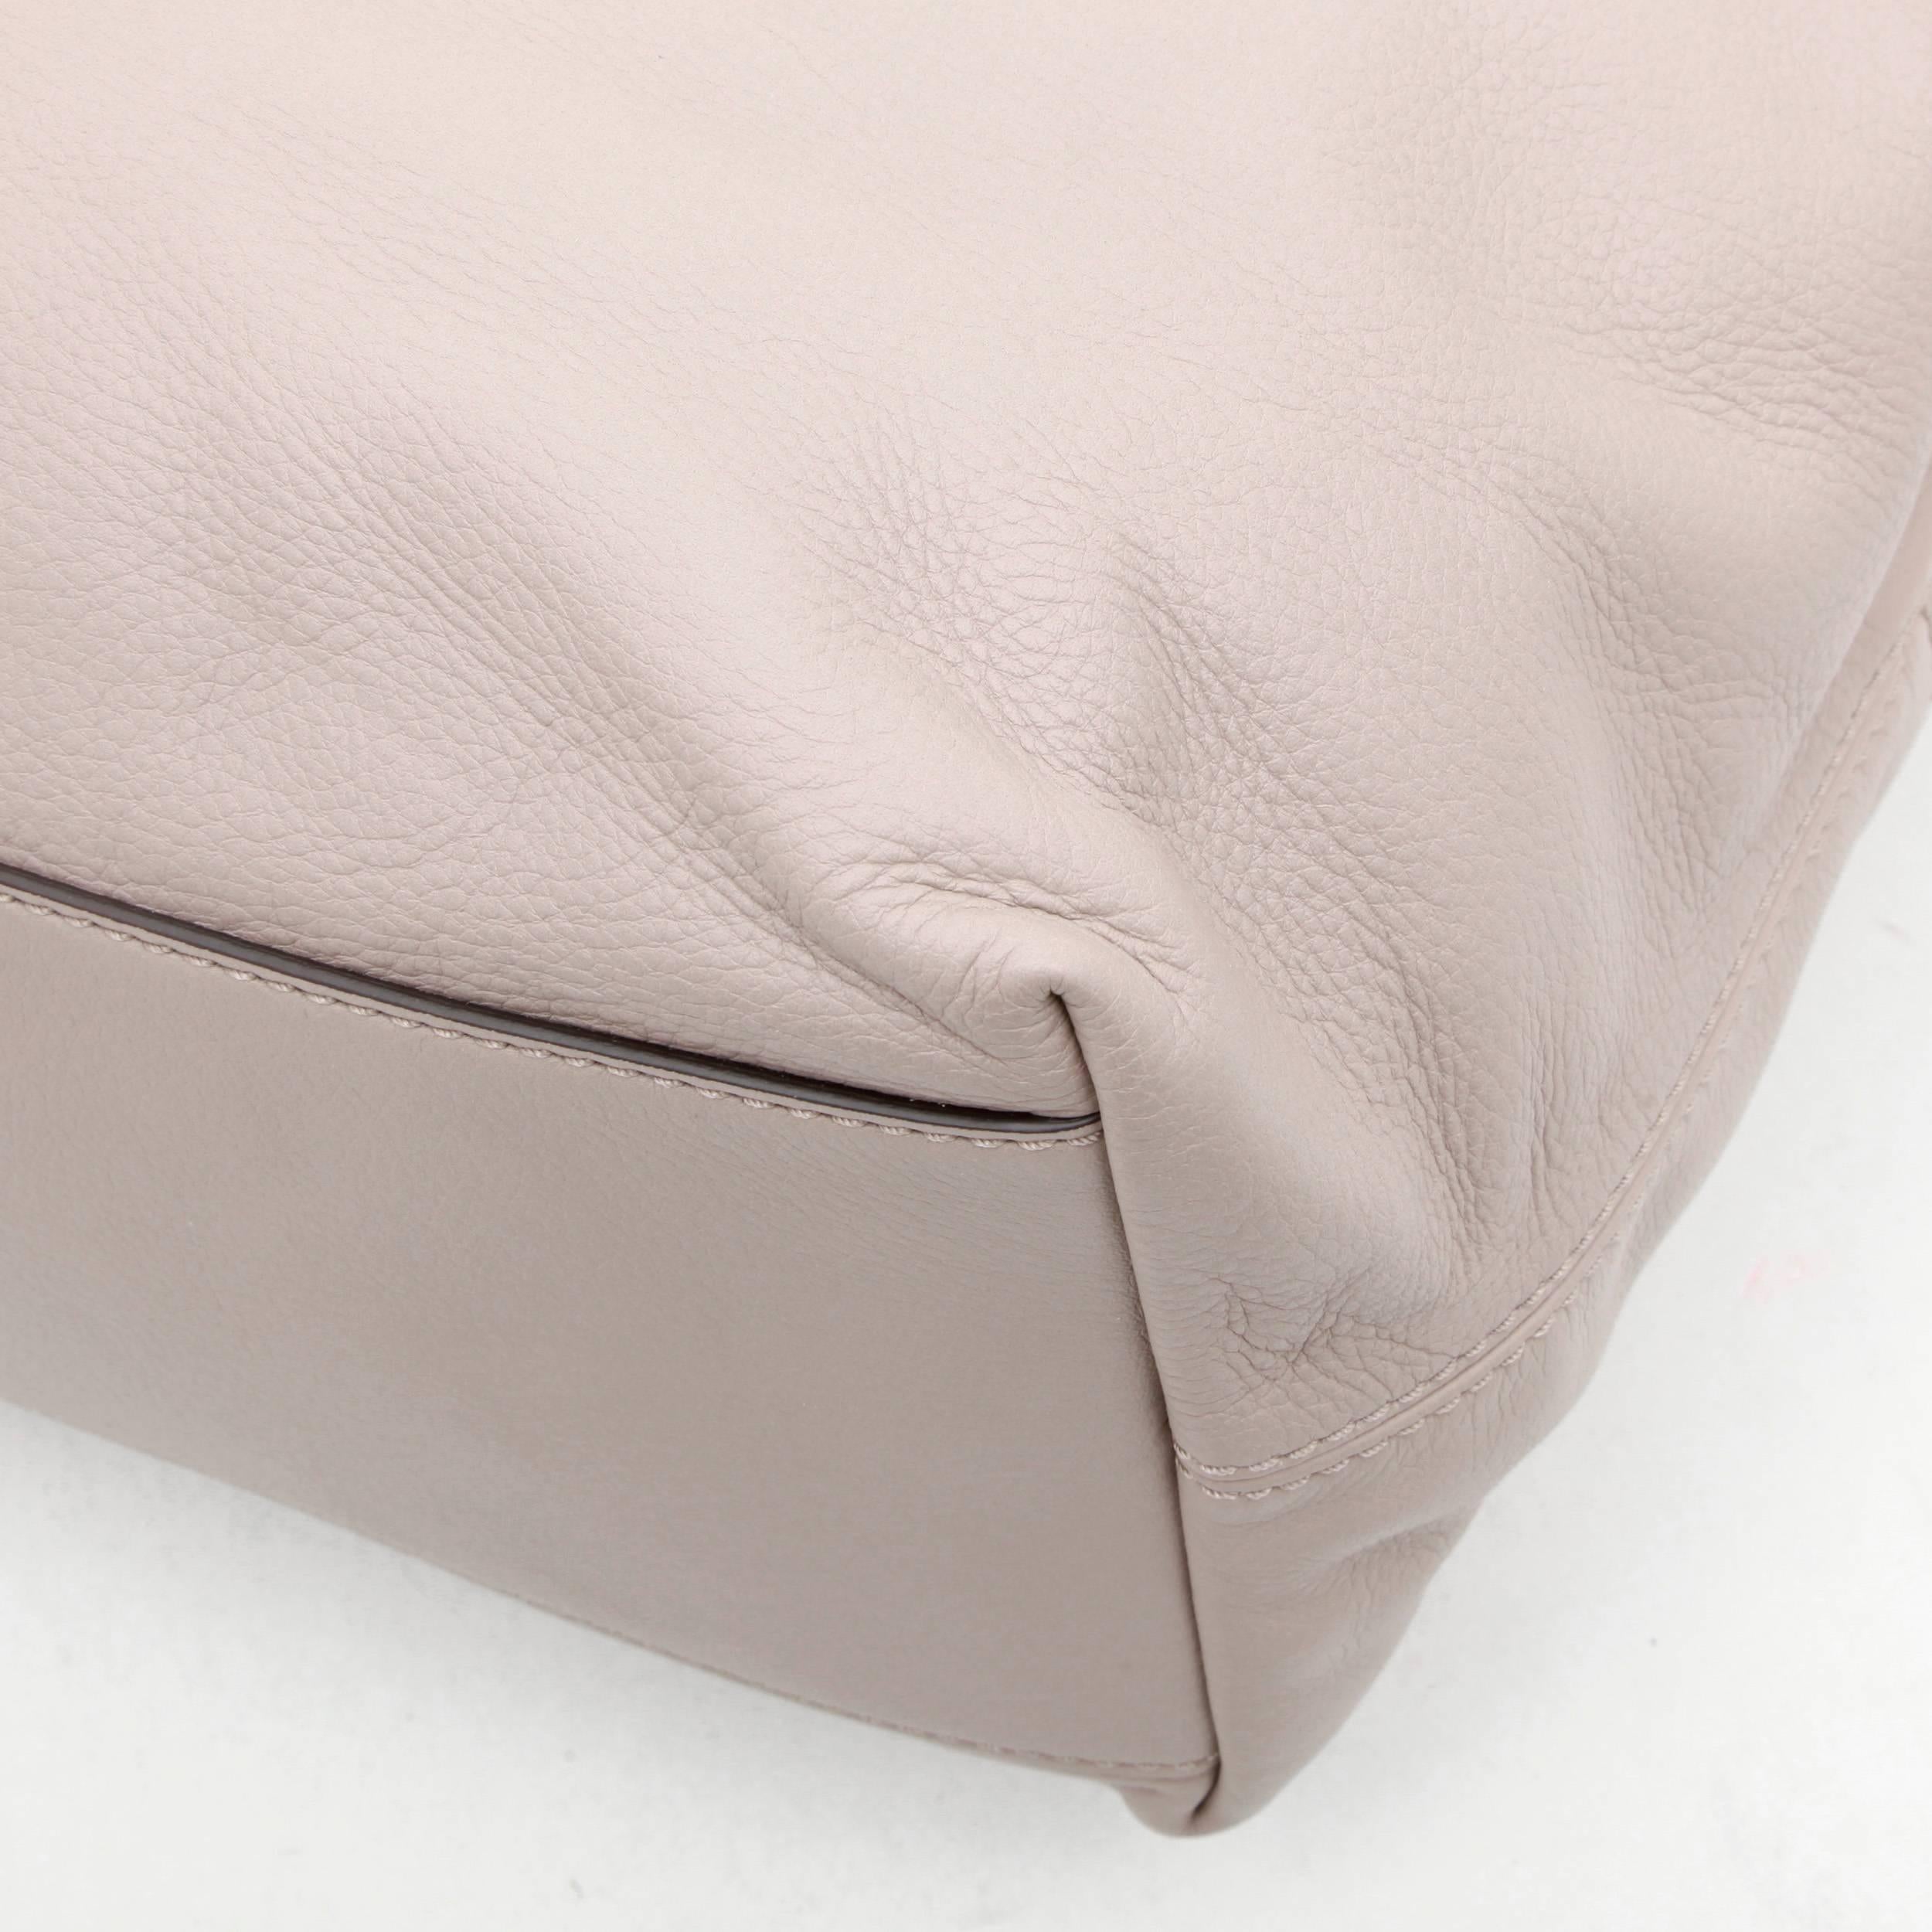 GIVENCHY Nightingale Large Model Handbag in Pink Beige Leather 2